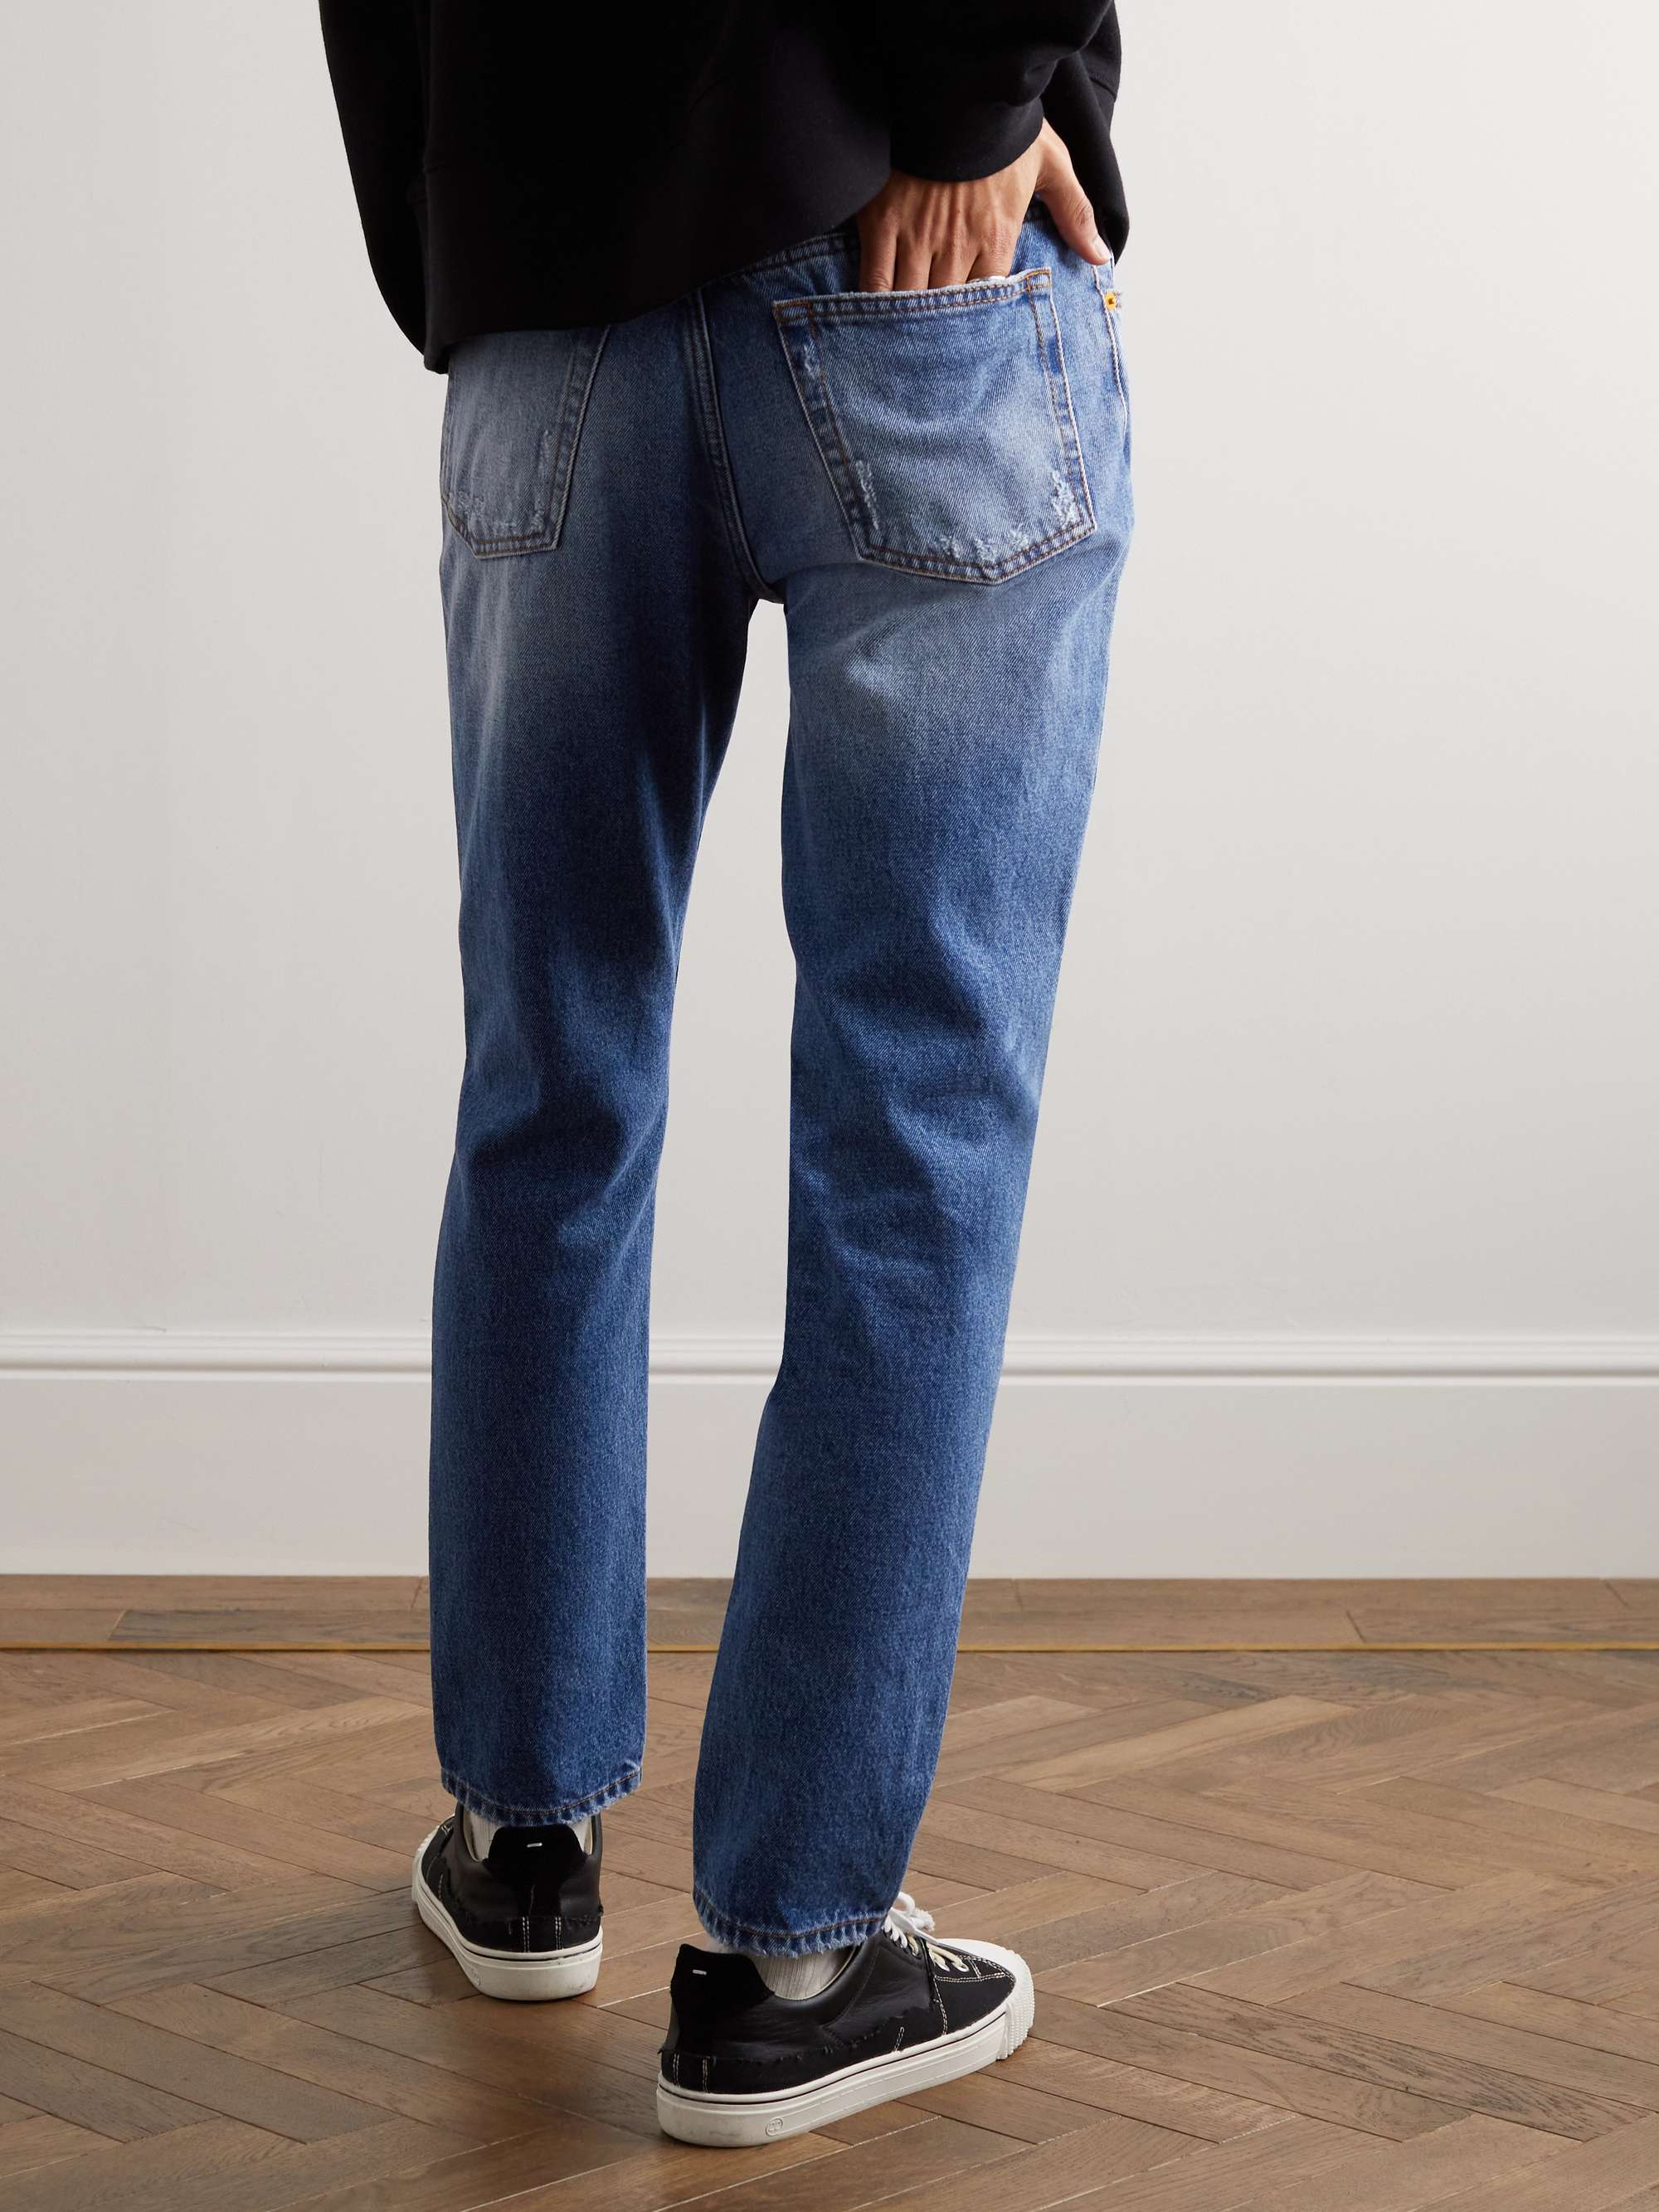 MONCLER GENIUS + 8 Palm Angels Skinny-Fit Panelled Distressed Jeans for Men  | MR PORTER